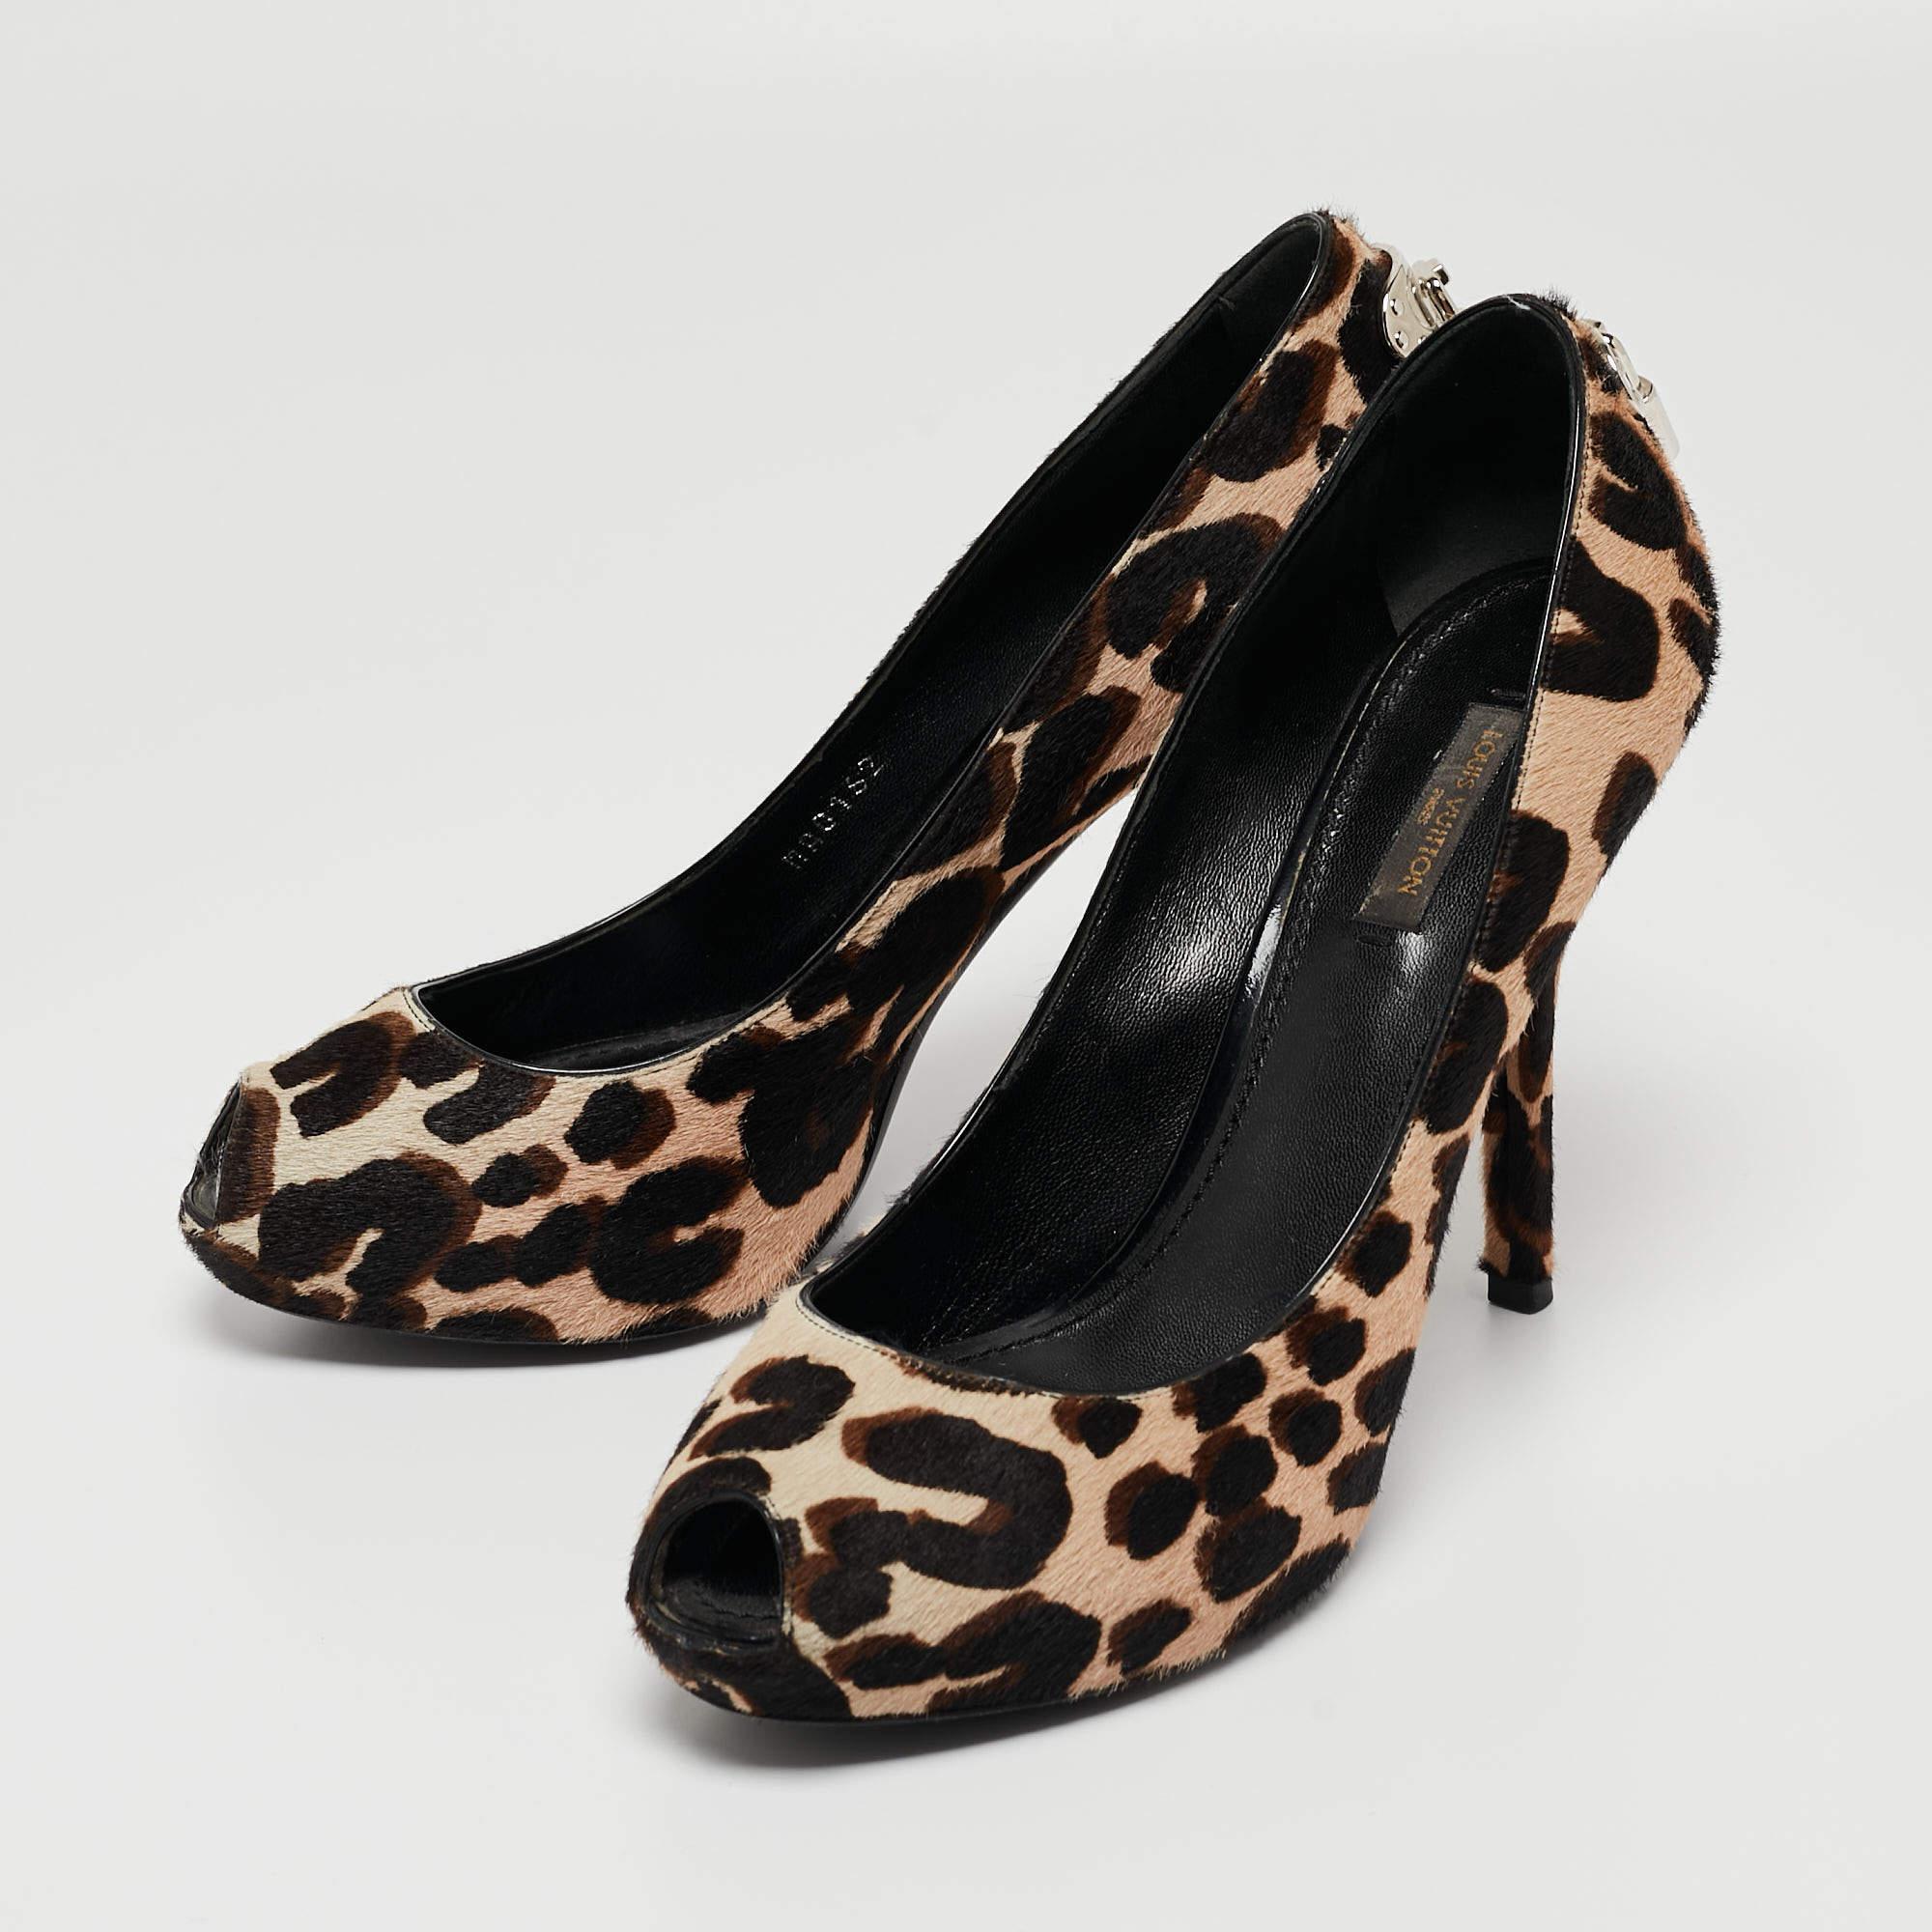 Women's Louis Vuitton Tricolor Leopard Print Calf Hair Oh Really! Peep Toe Pumps Size 38 For Sale